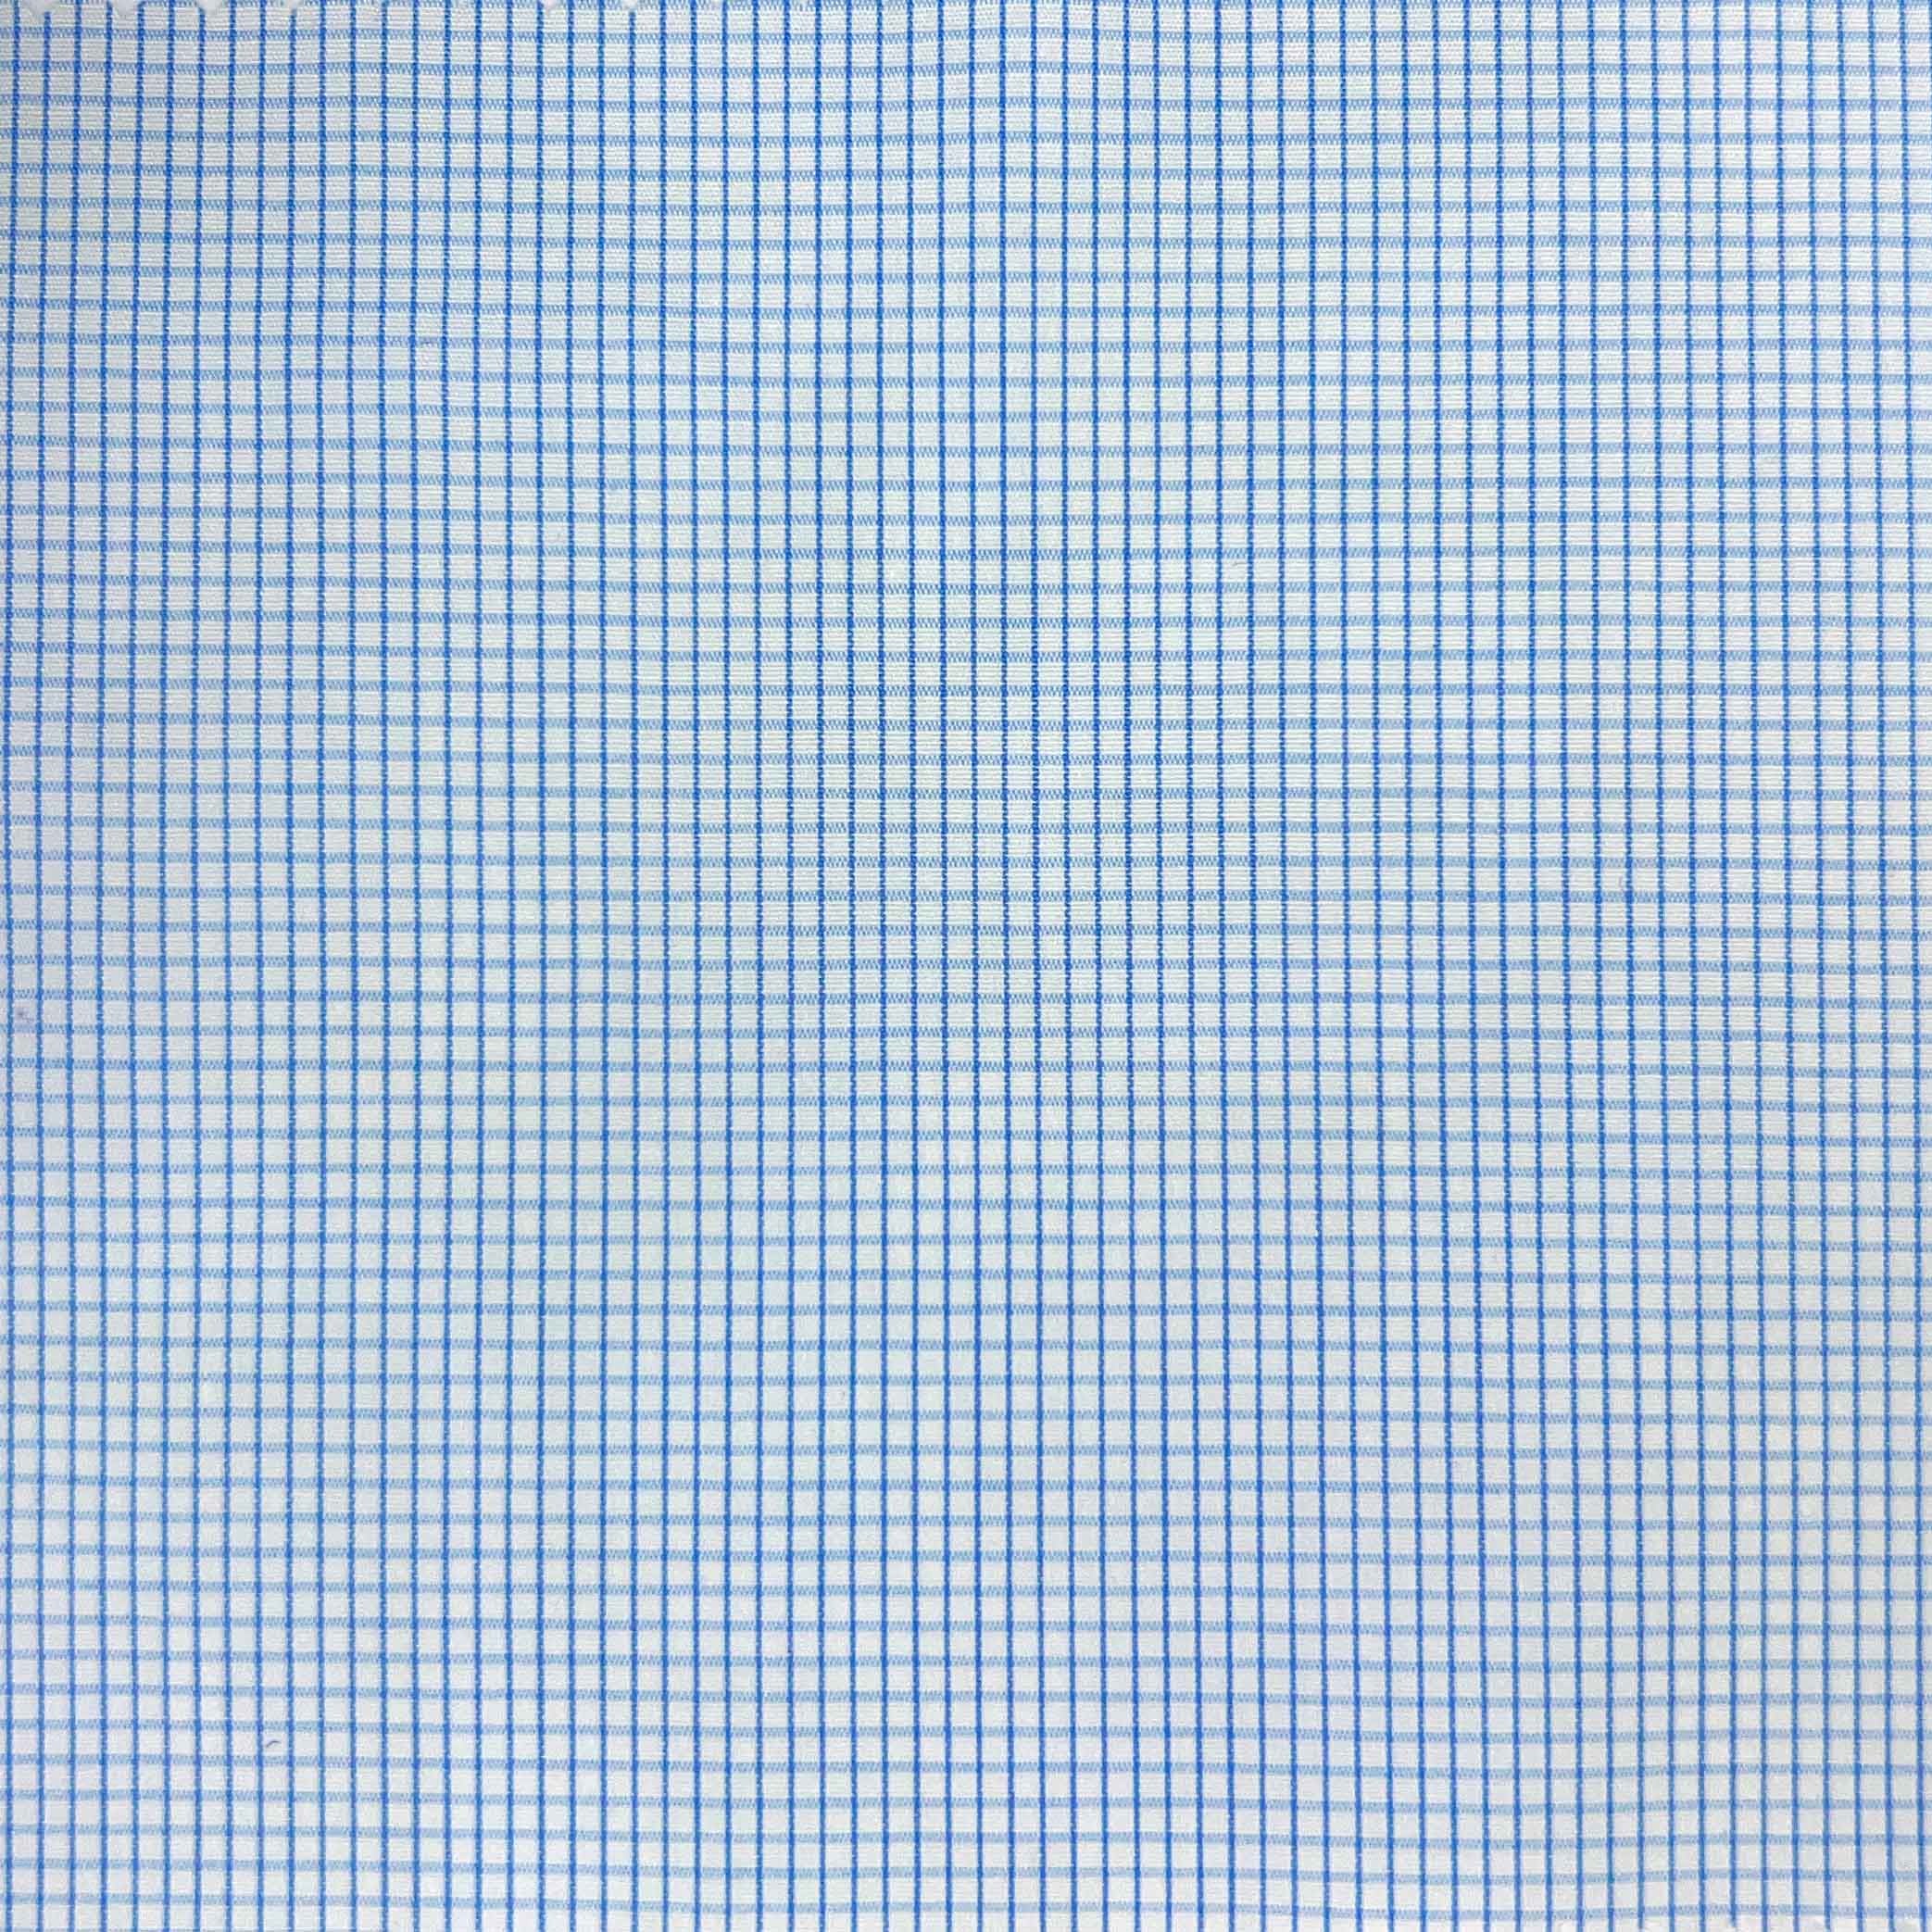 Light Blue Fine Mini Grid Checks Giza 45 Egyptian Cotton Dress Shirt Cloth